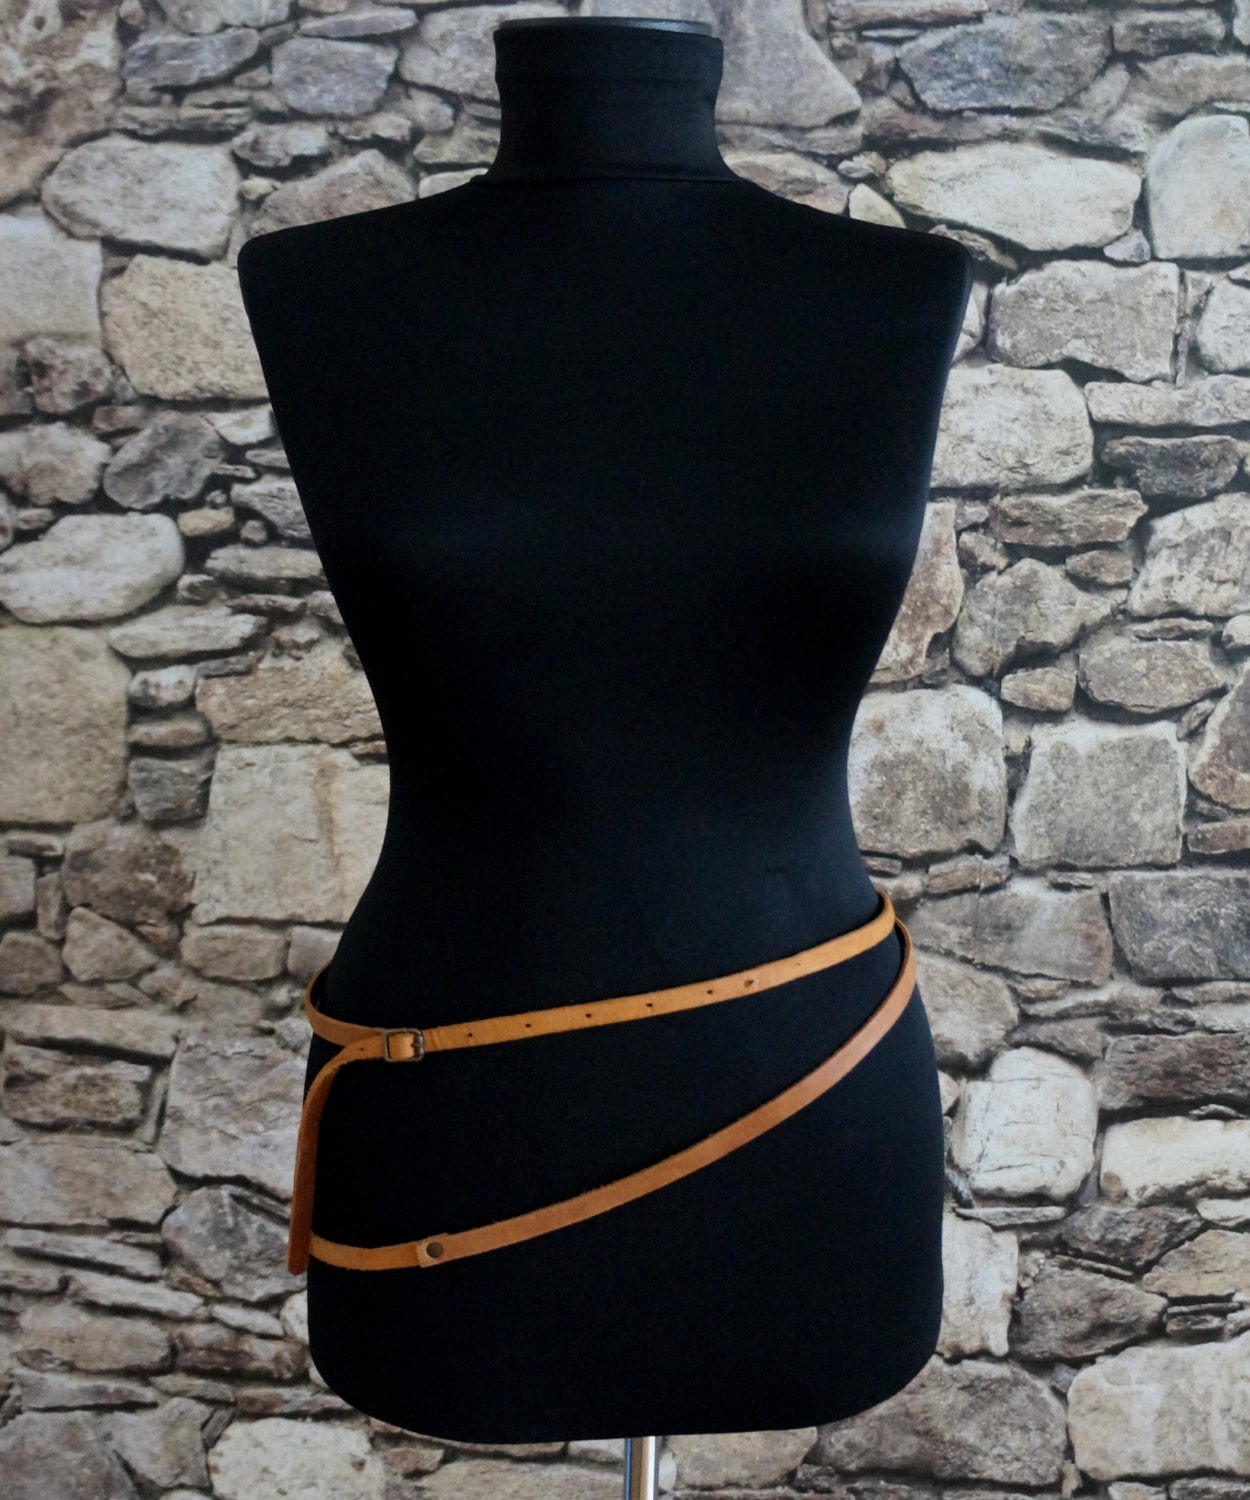 Double hip belt, genuine leather brown thin belt, loose skinny tan belt, medium size, vintage 